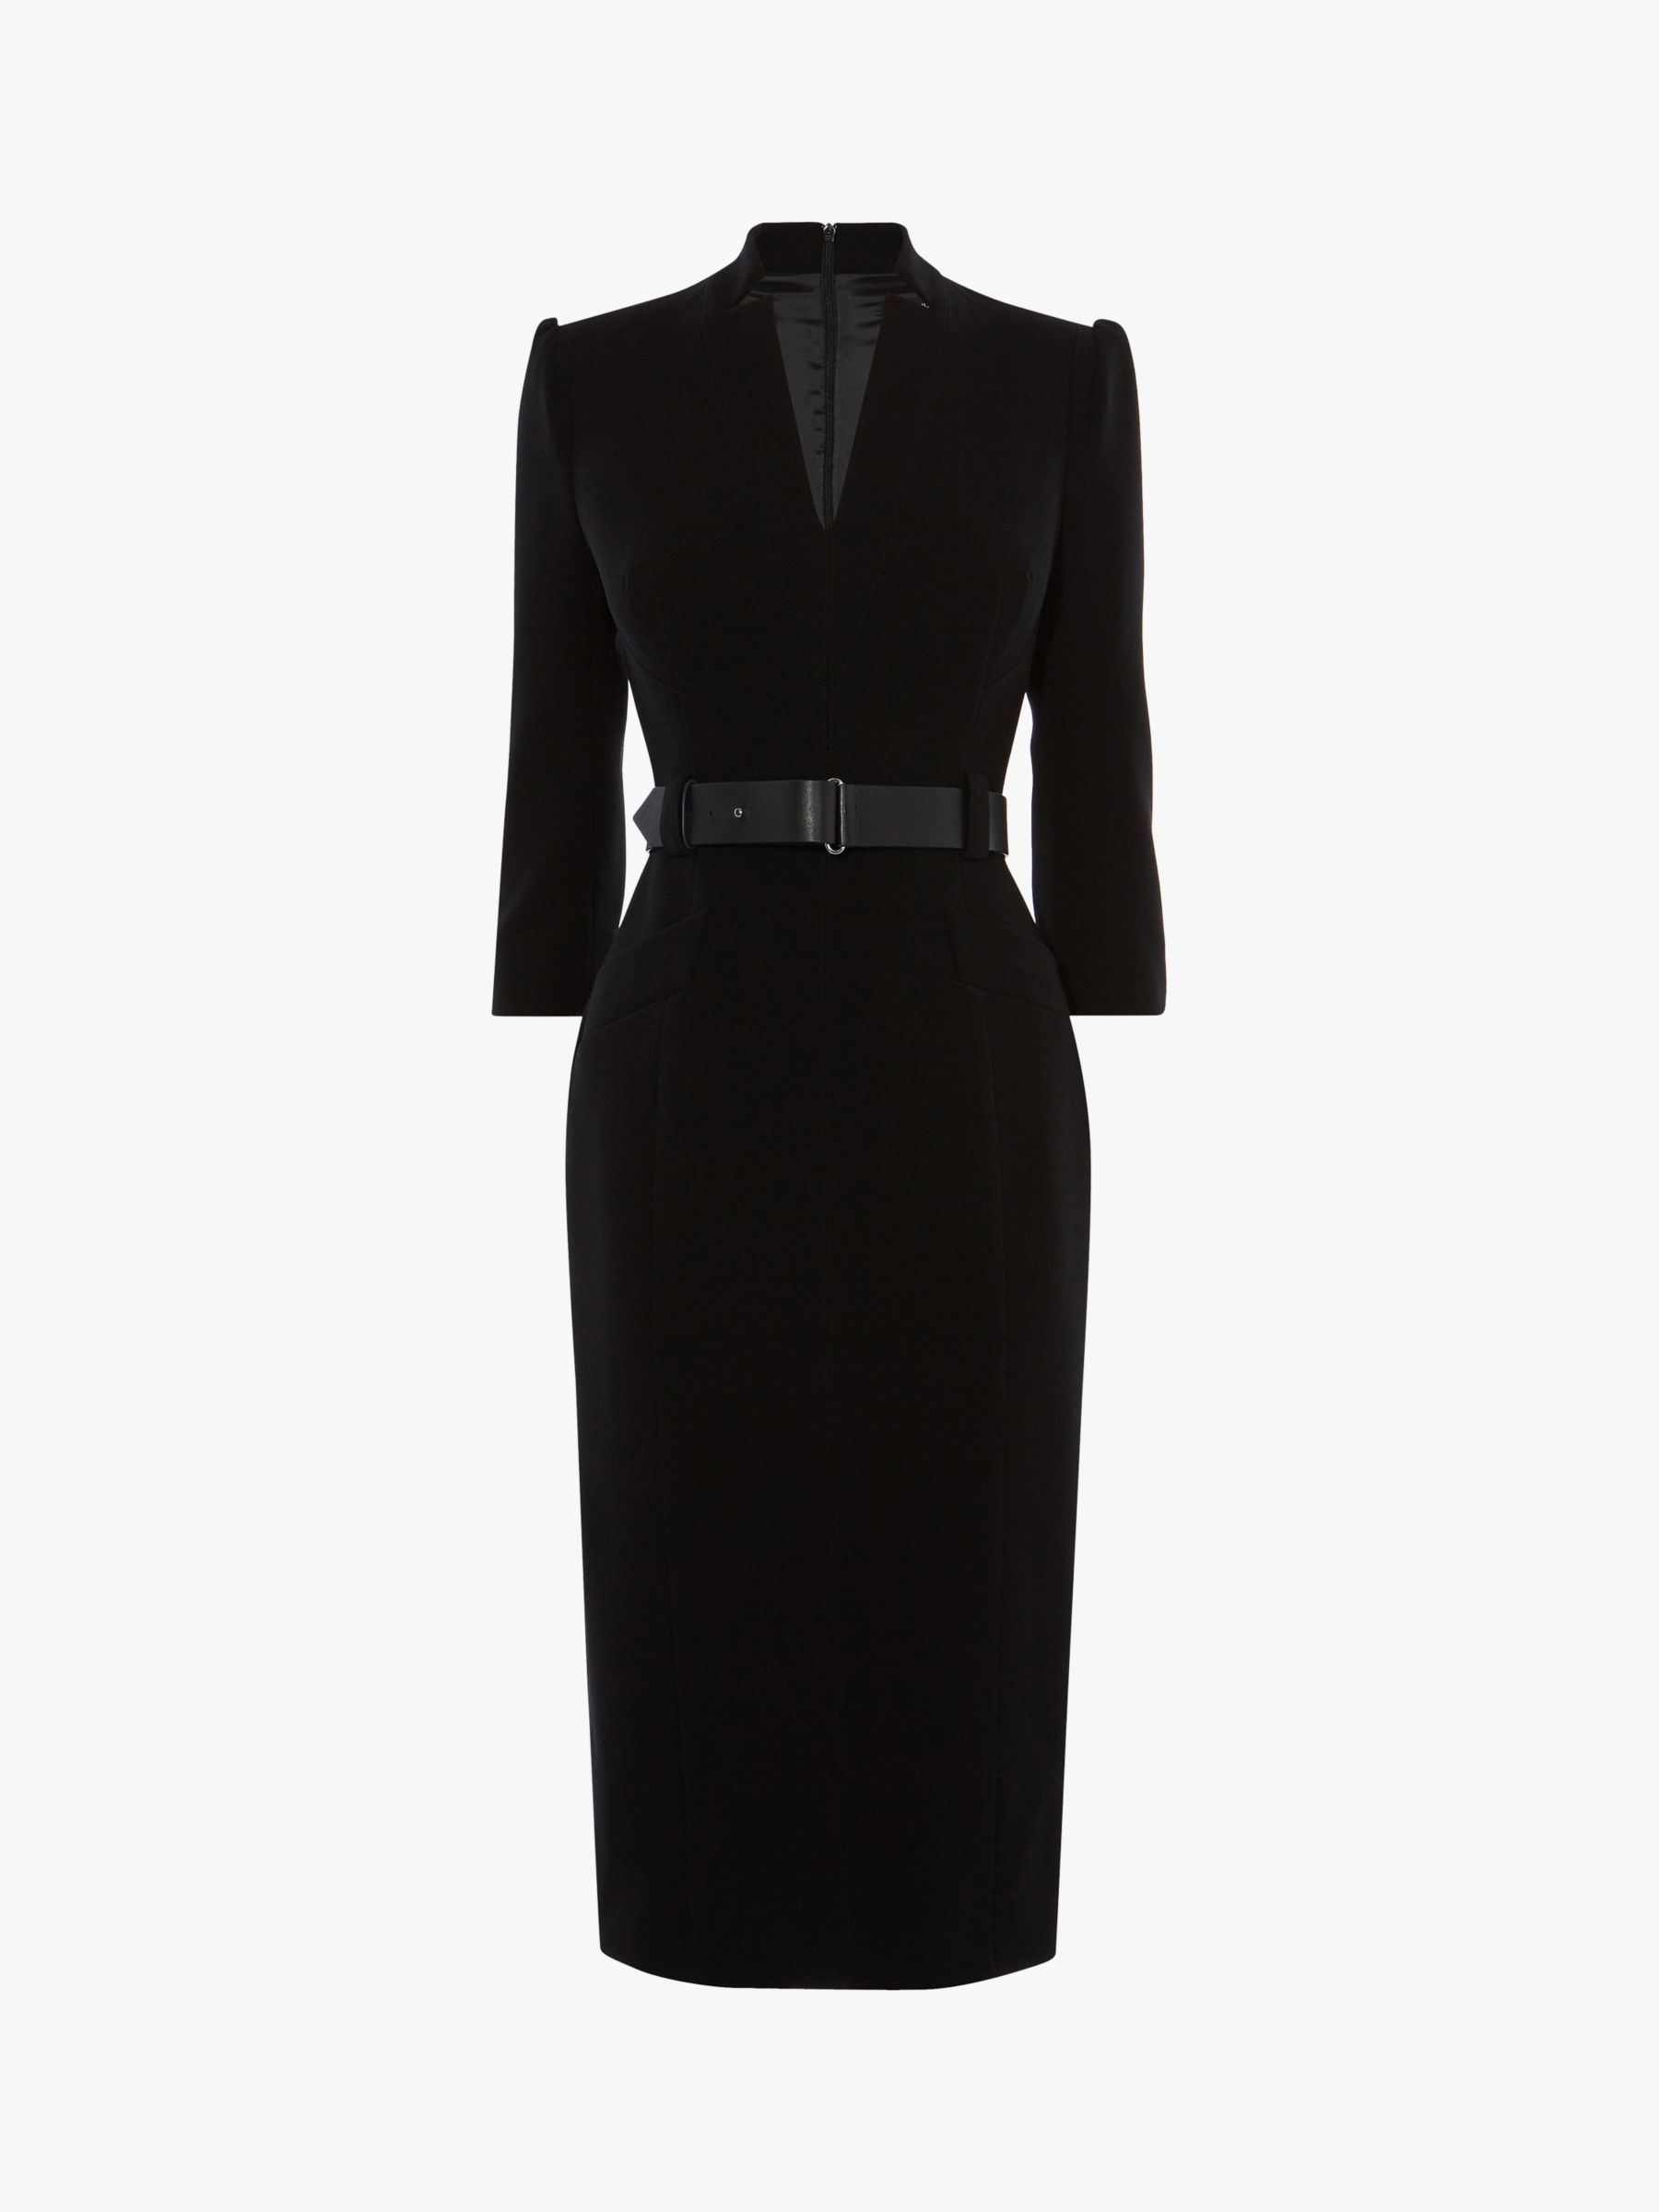 Karen Millen Statement Shoulder Belted Midi Dress, Black